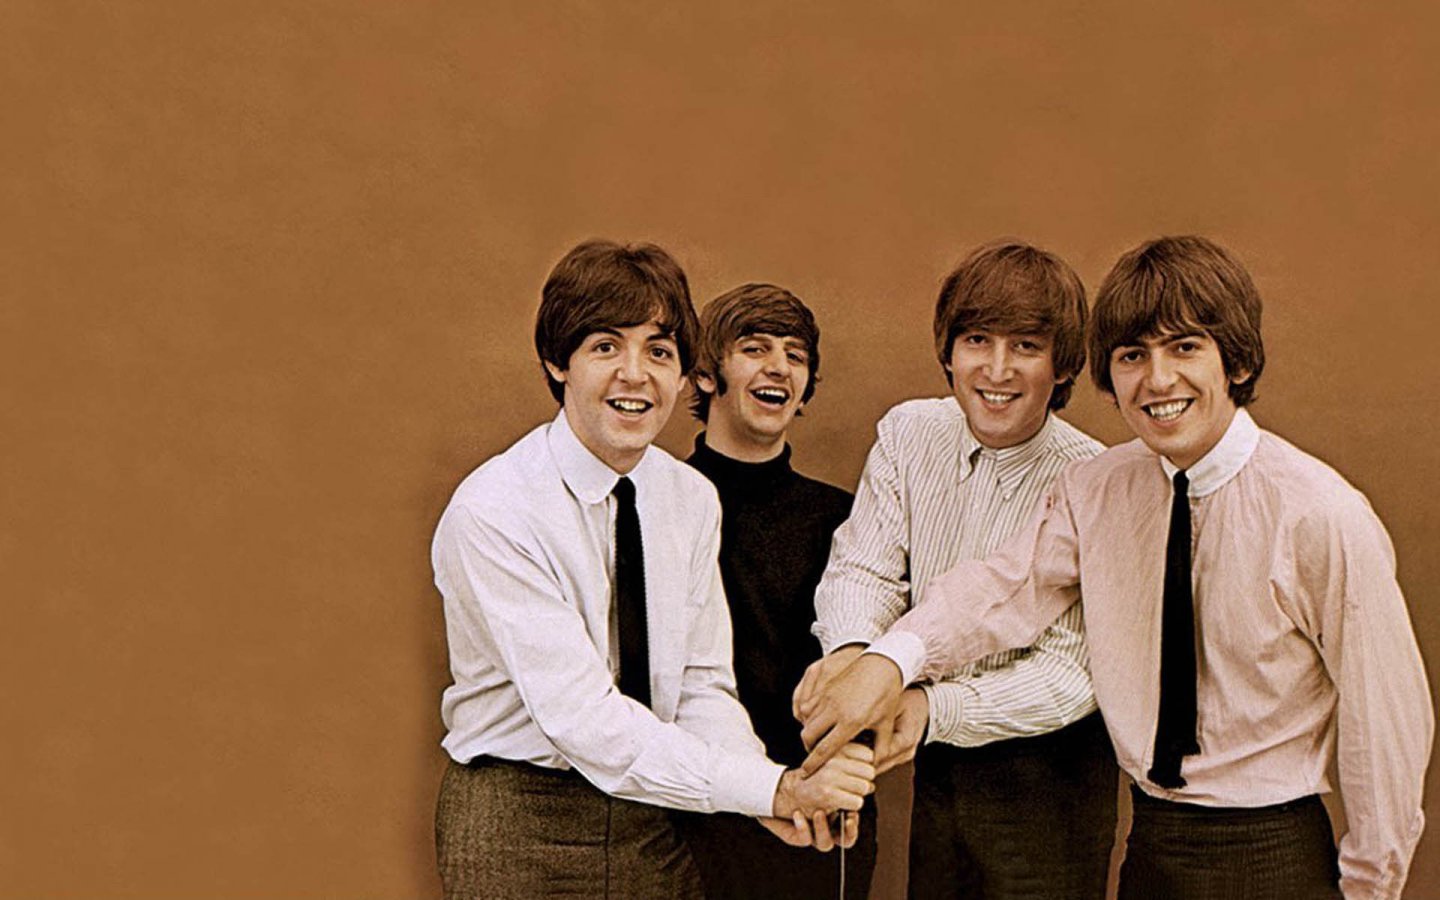 The Beatles Wallpapers Desktop Music Beatles 1920x1200